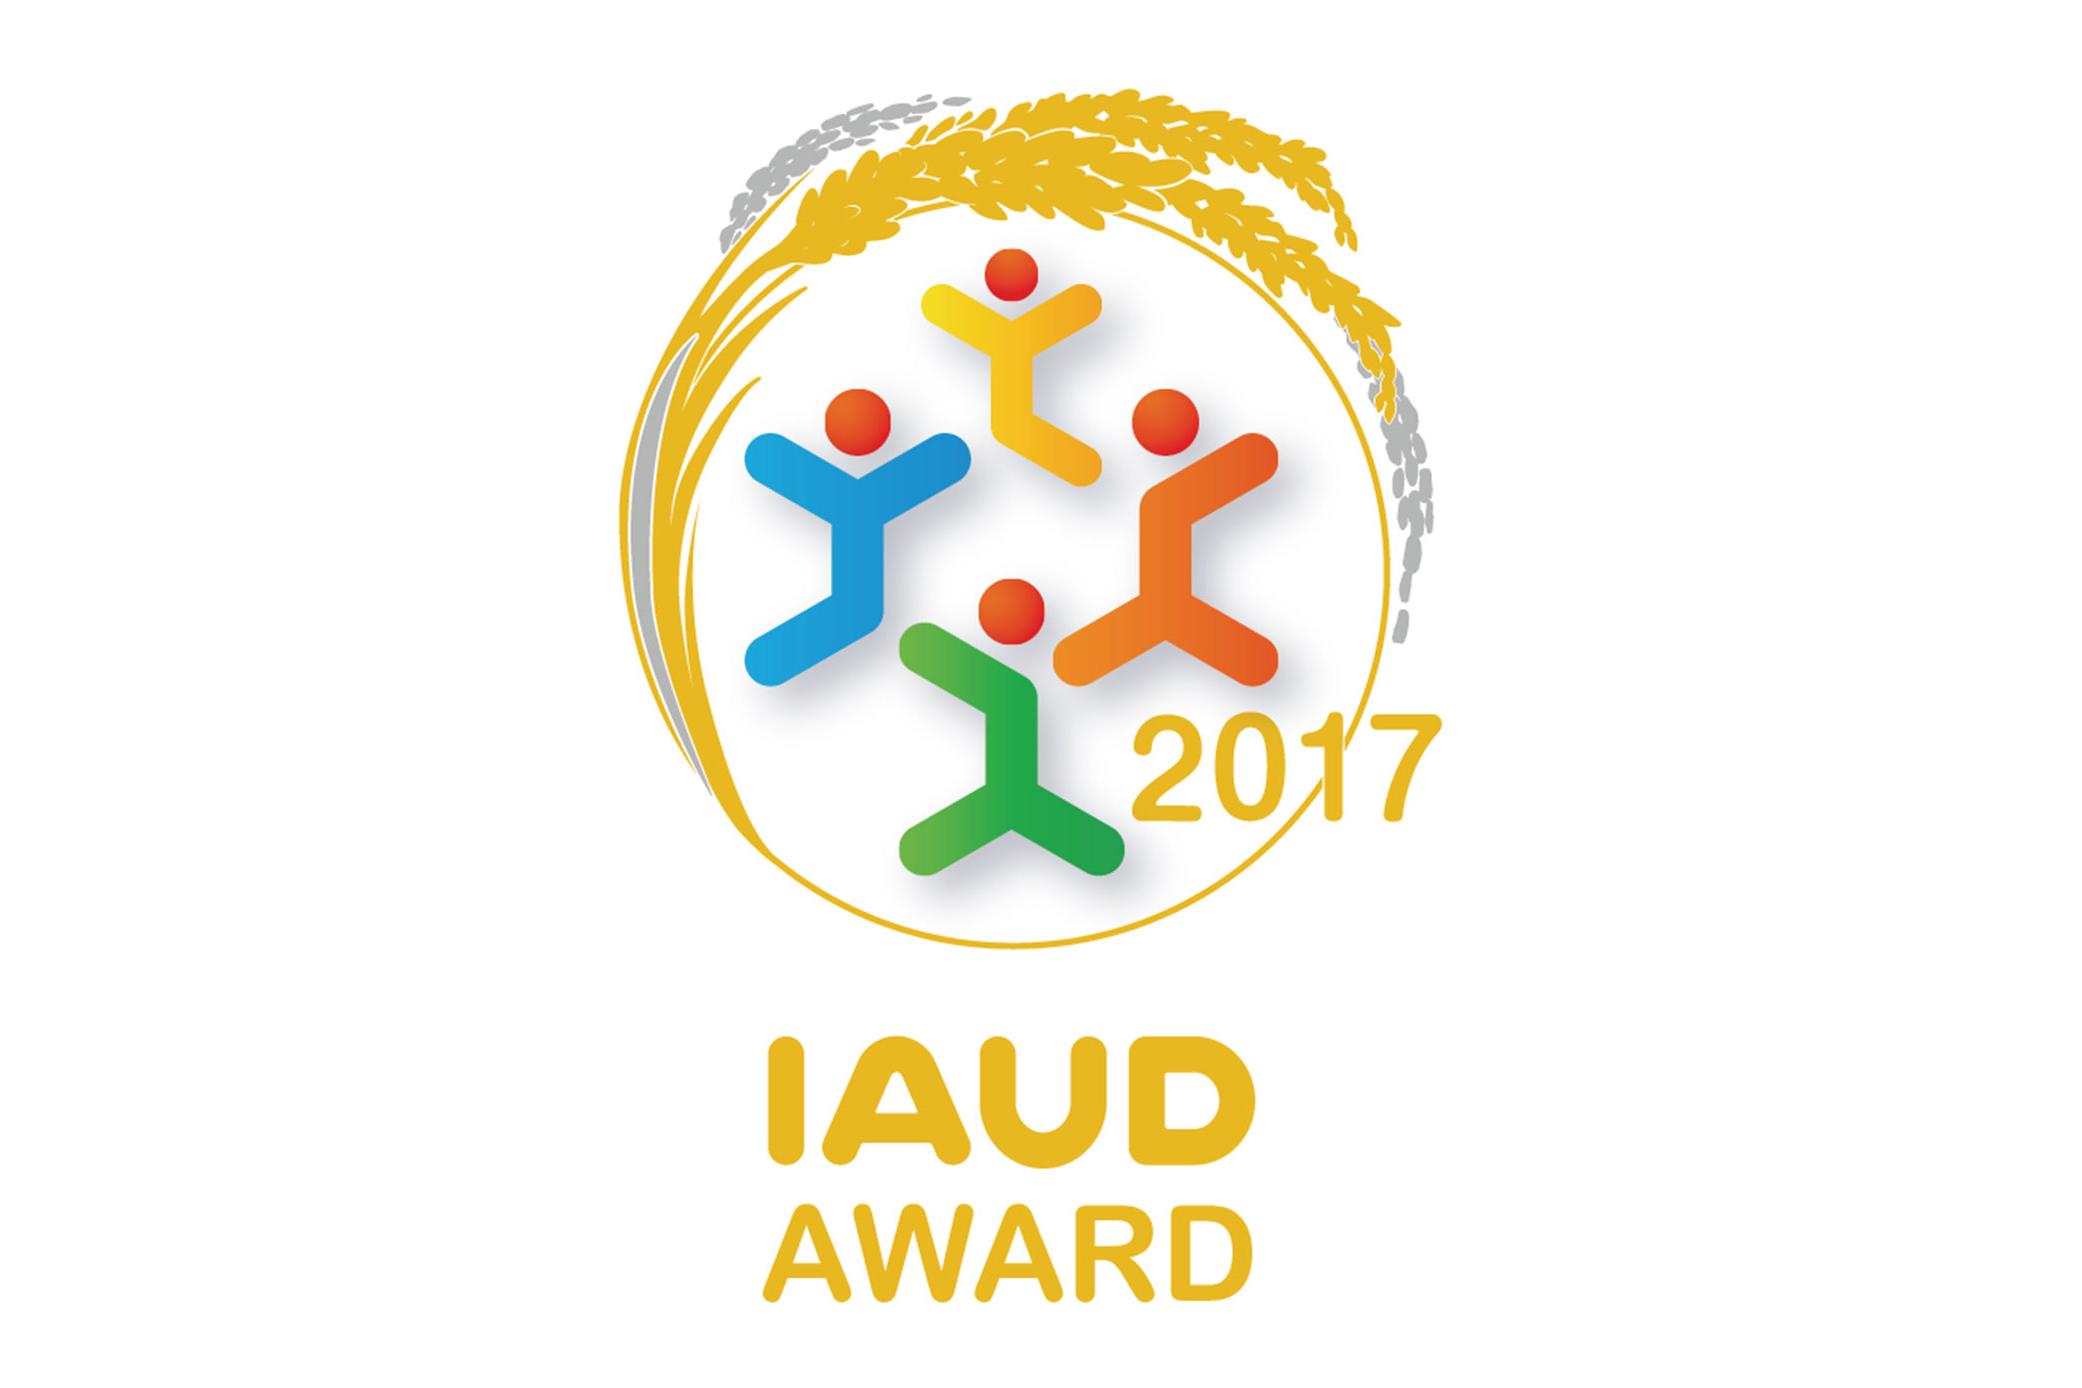 image: IAUD Award 2017 Grand Award logo